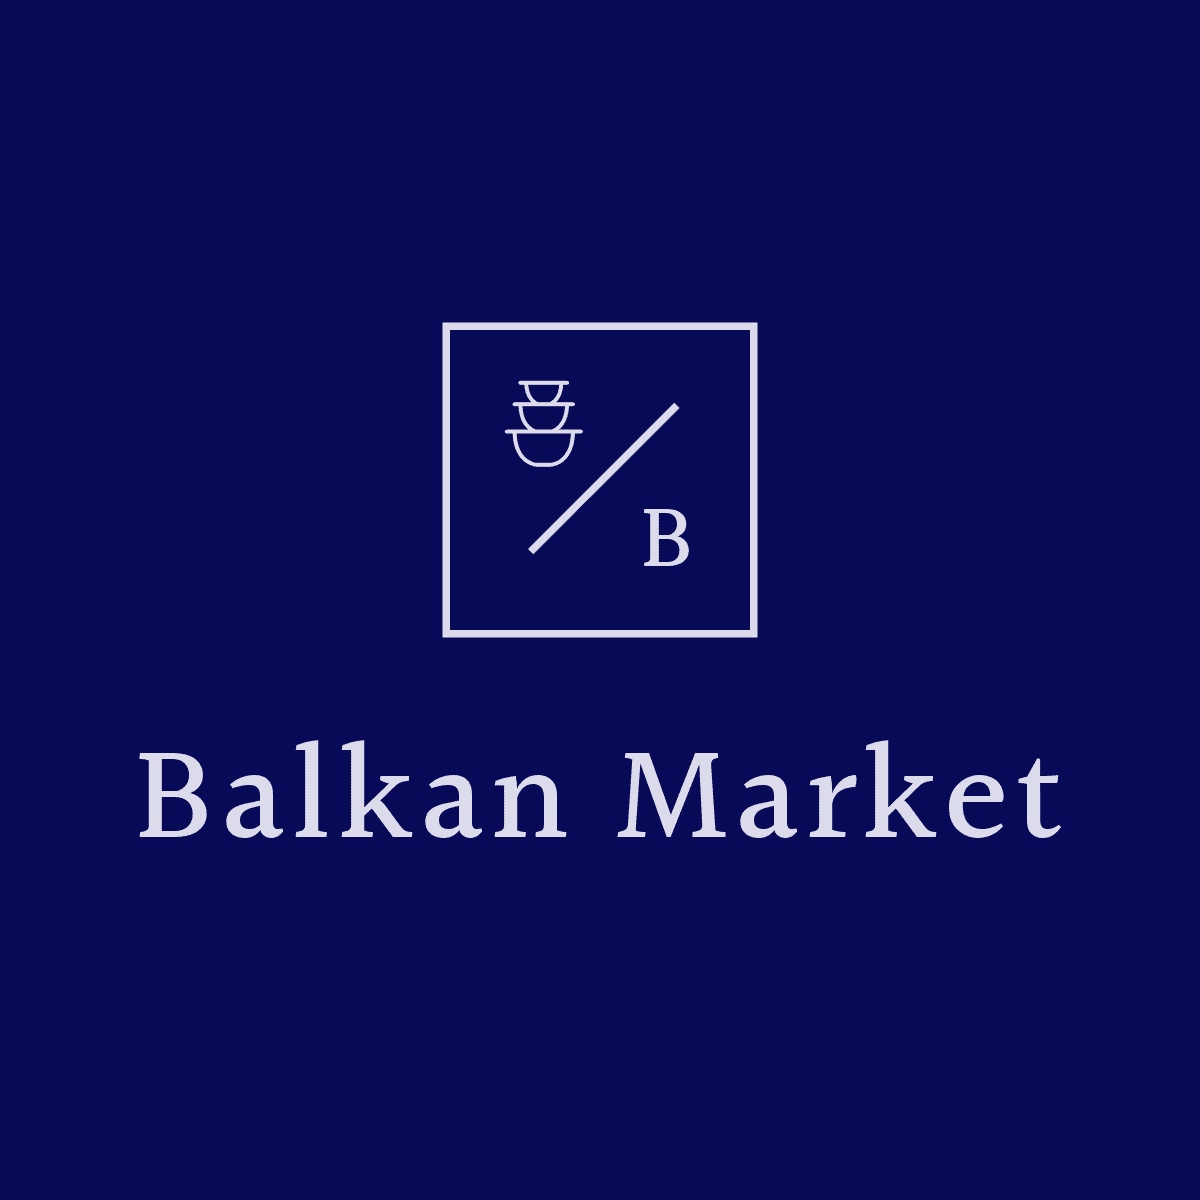 Balkan Market